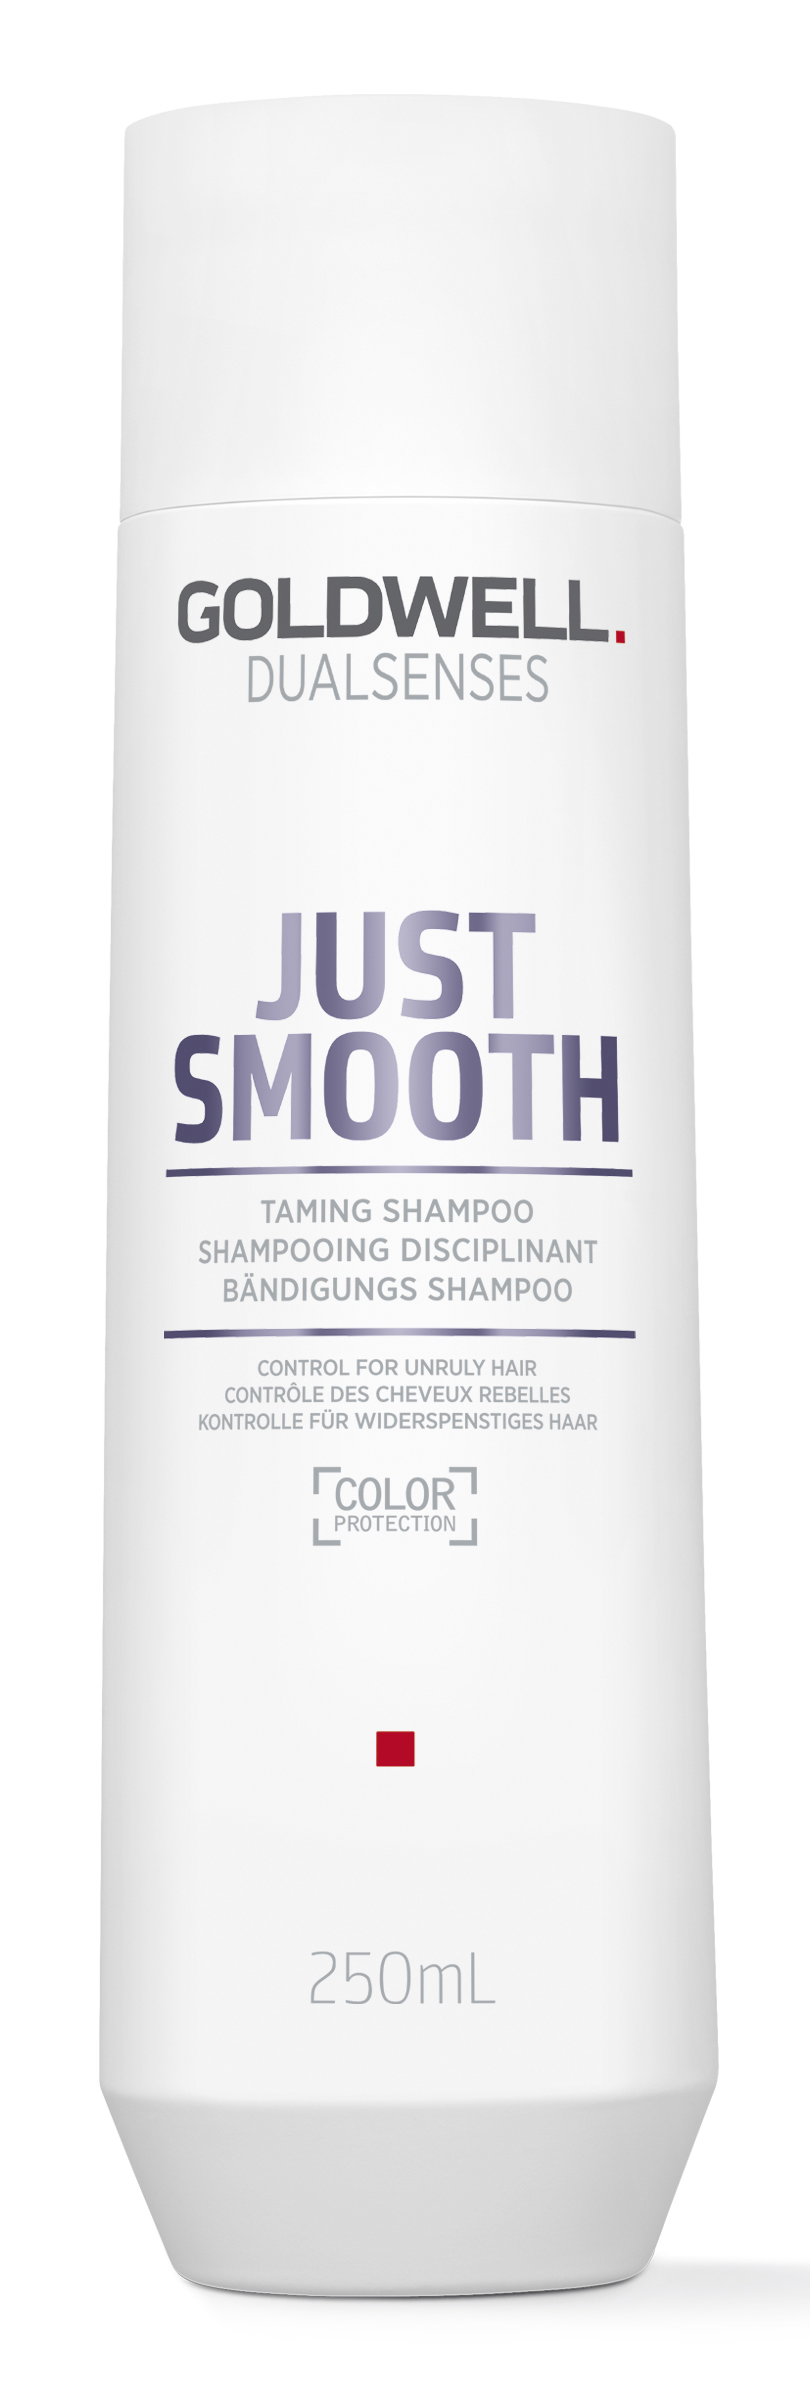 Dual Senses Just Smooth Shampoo